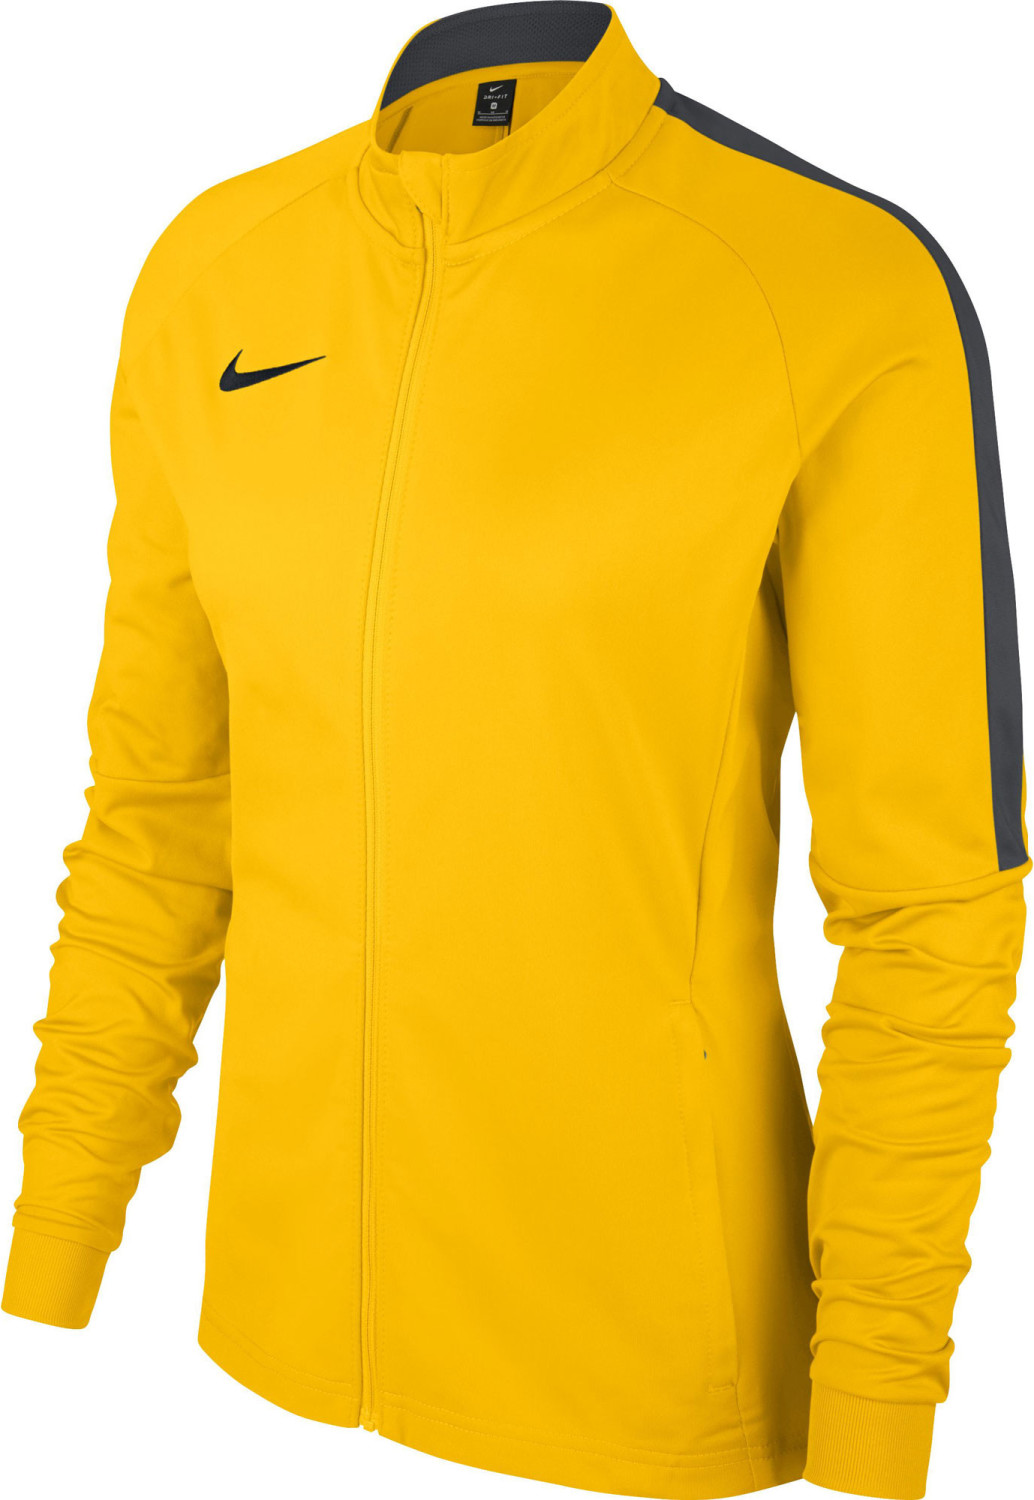 Nike Dry Academy 18 Women Training Jacket tour yellow/anthracite/black